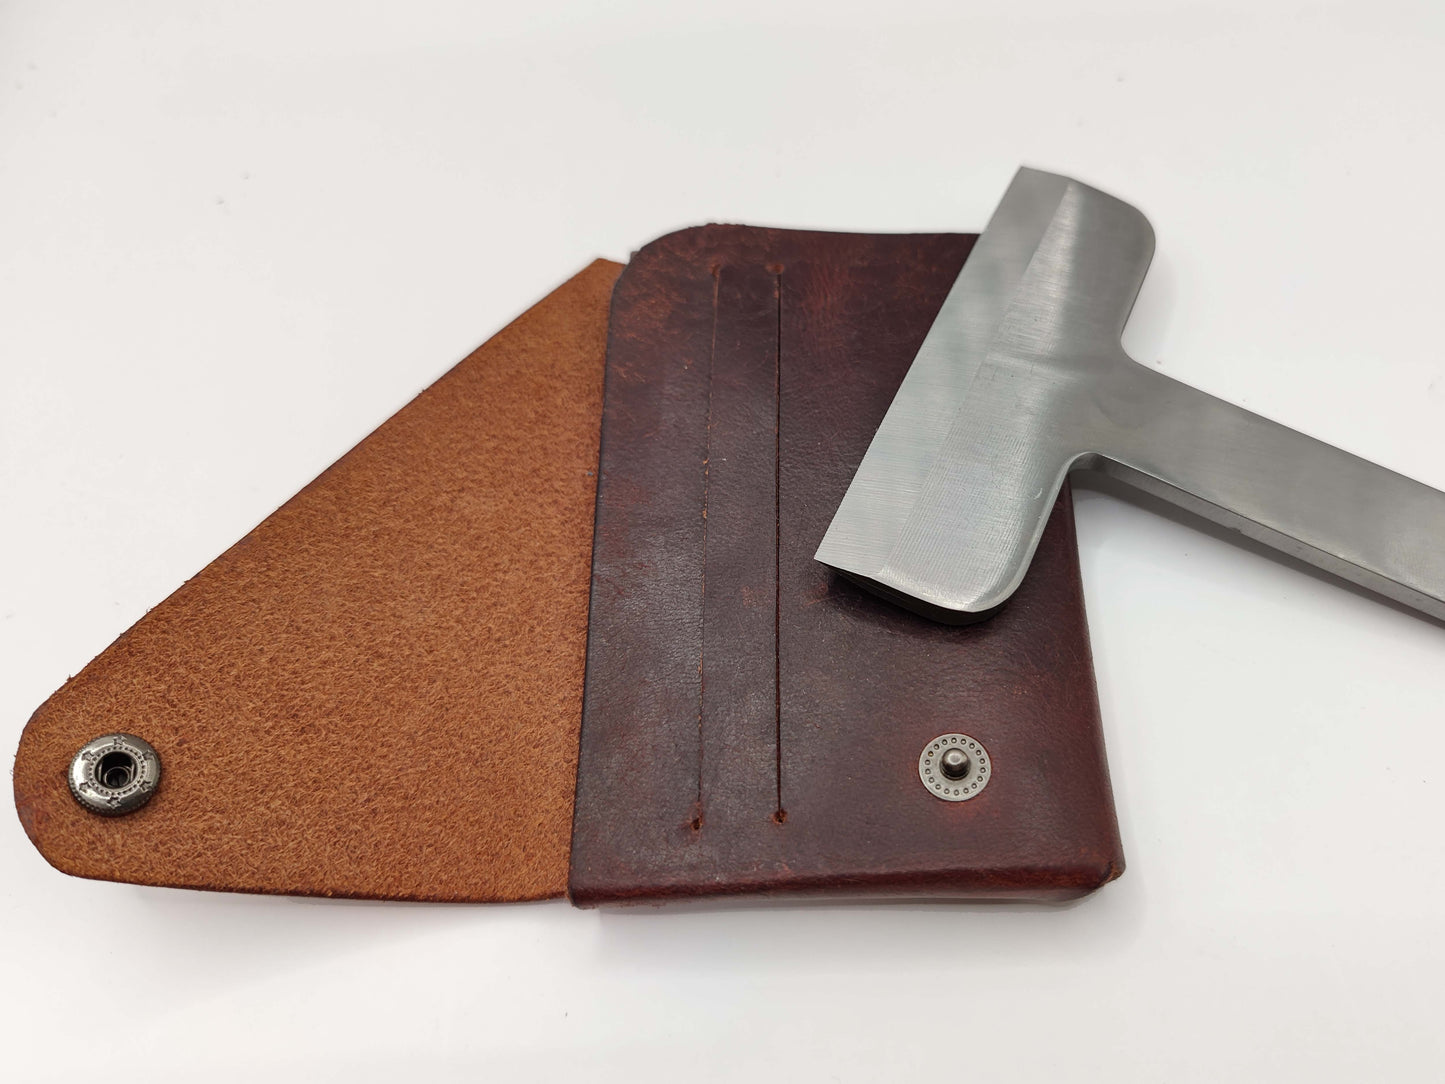 FLAT PUNCH KNIFE TOOL - CREDIT CARD SLITS